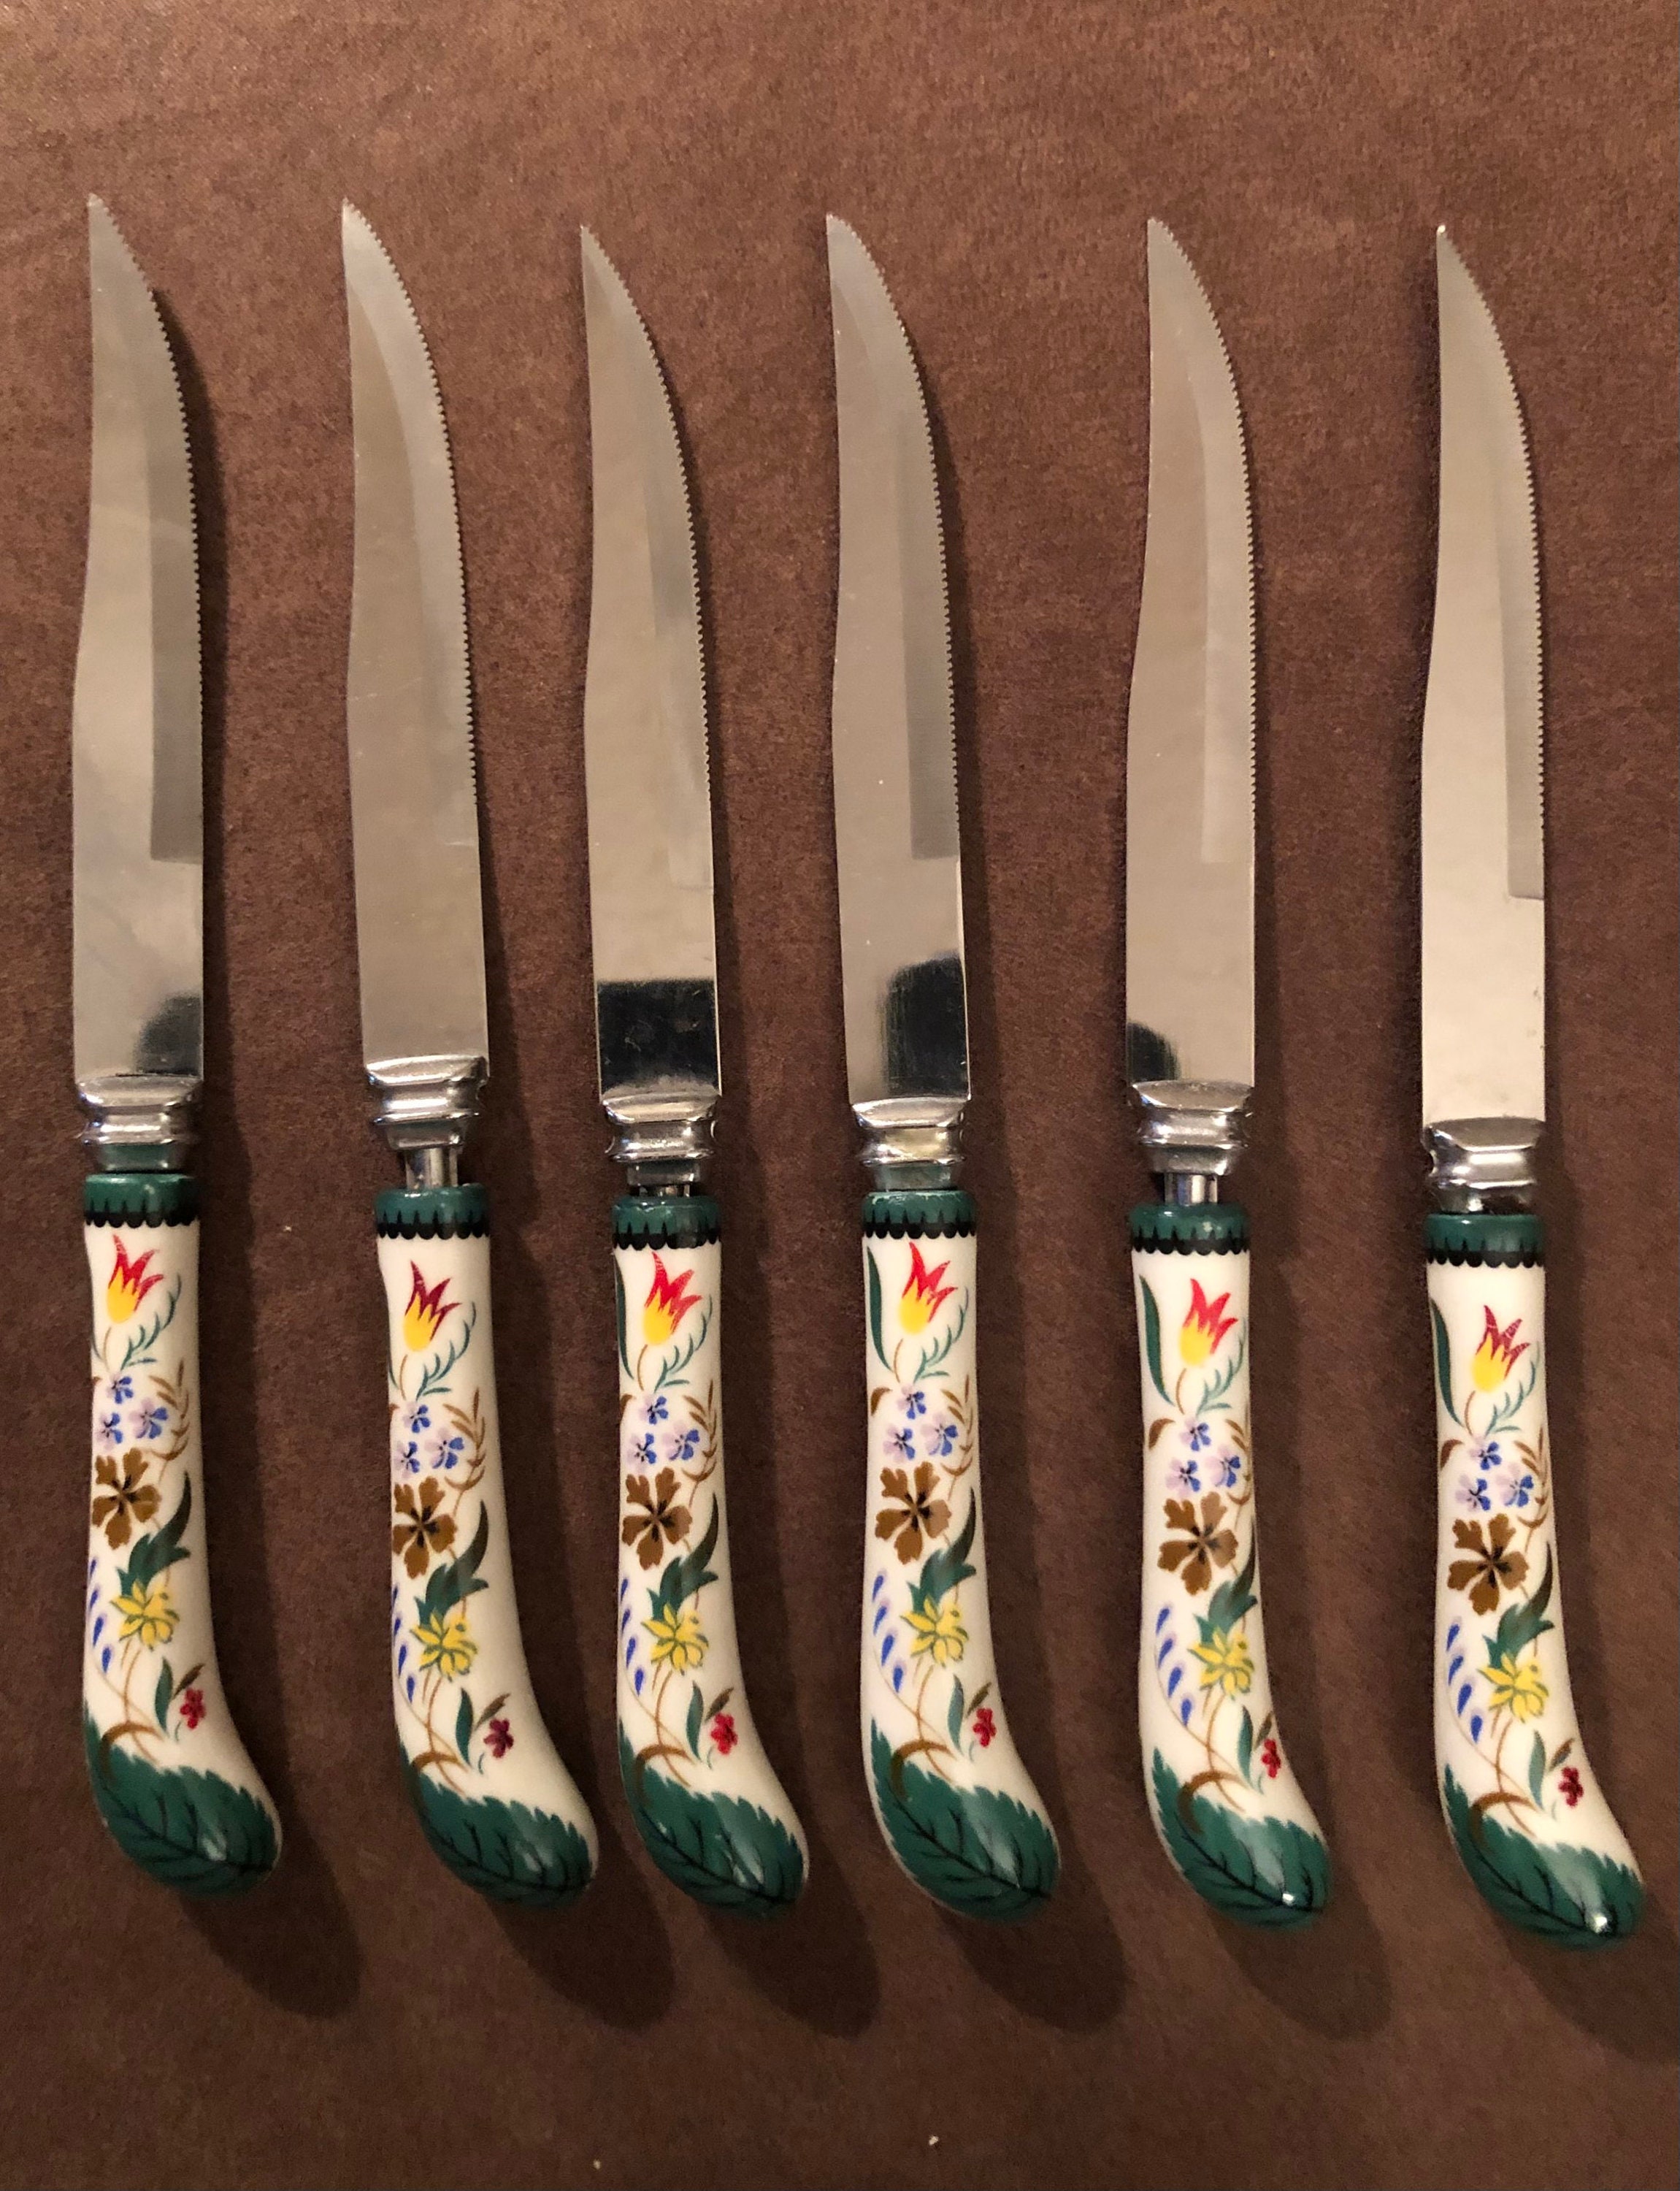 MICHELANGELO Kitchen Knife Set 10 Piece 5 knives 5 sheaths BRAND NEW